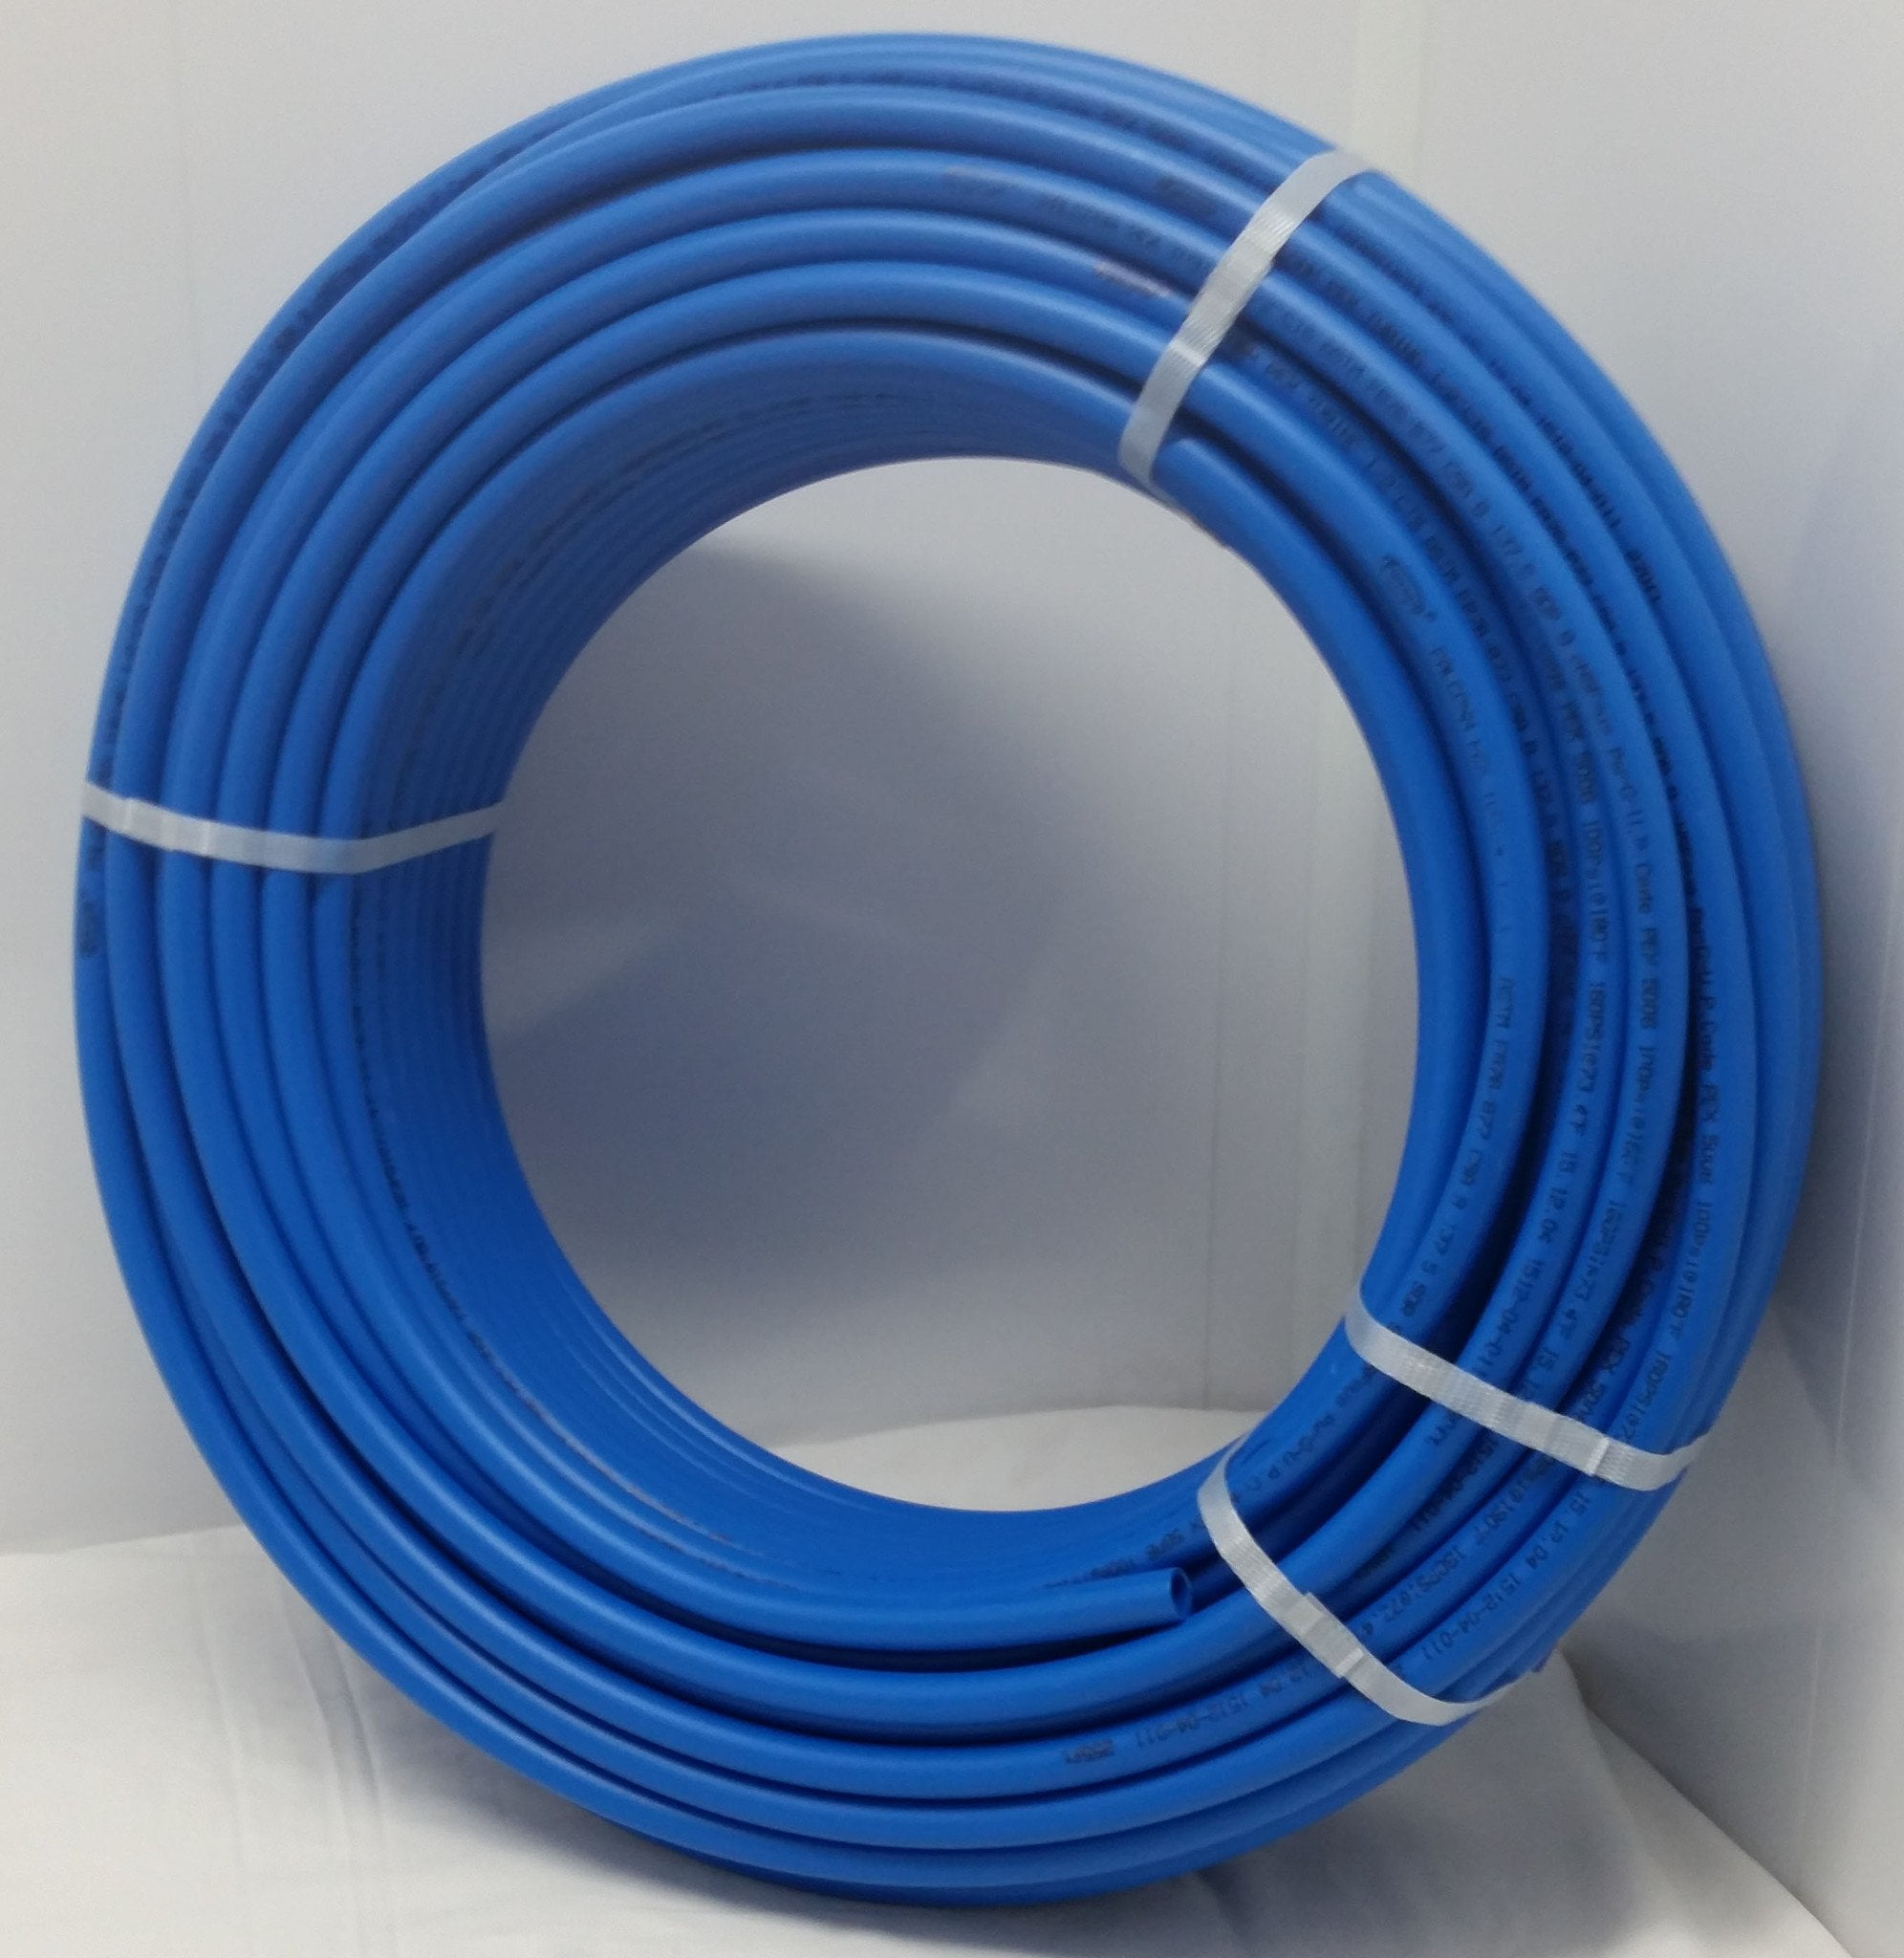 500' Coil PEX Tubing Blue Certified Non-Barrier Htg/Plbg/Potable Water 3/4" 